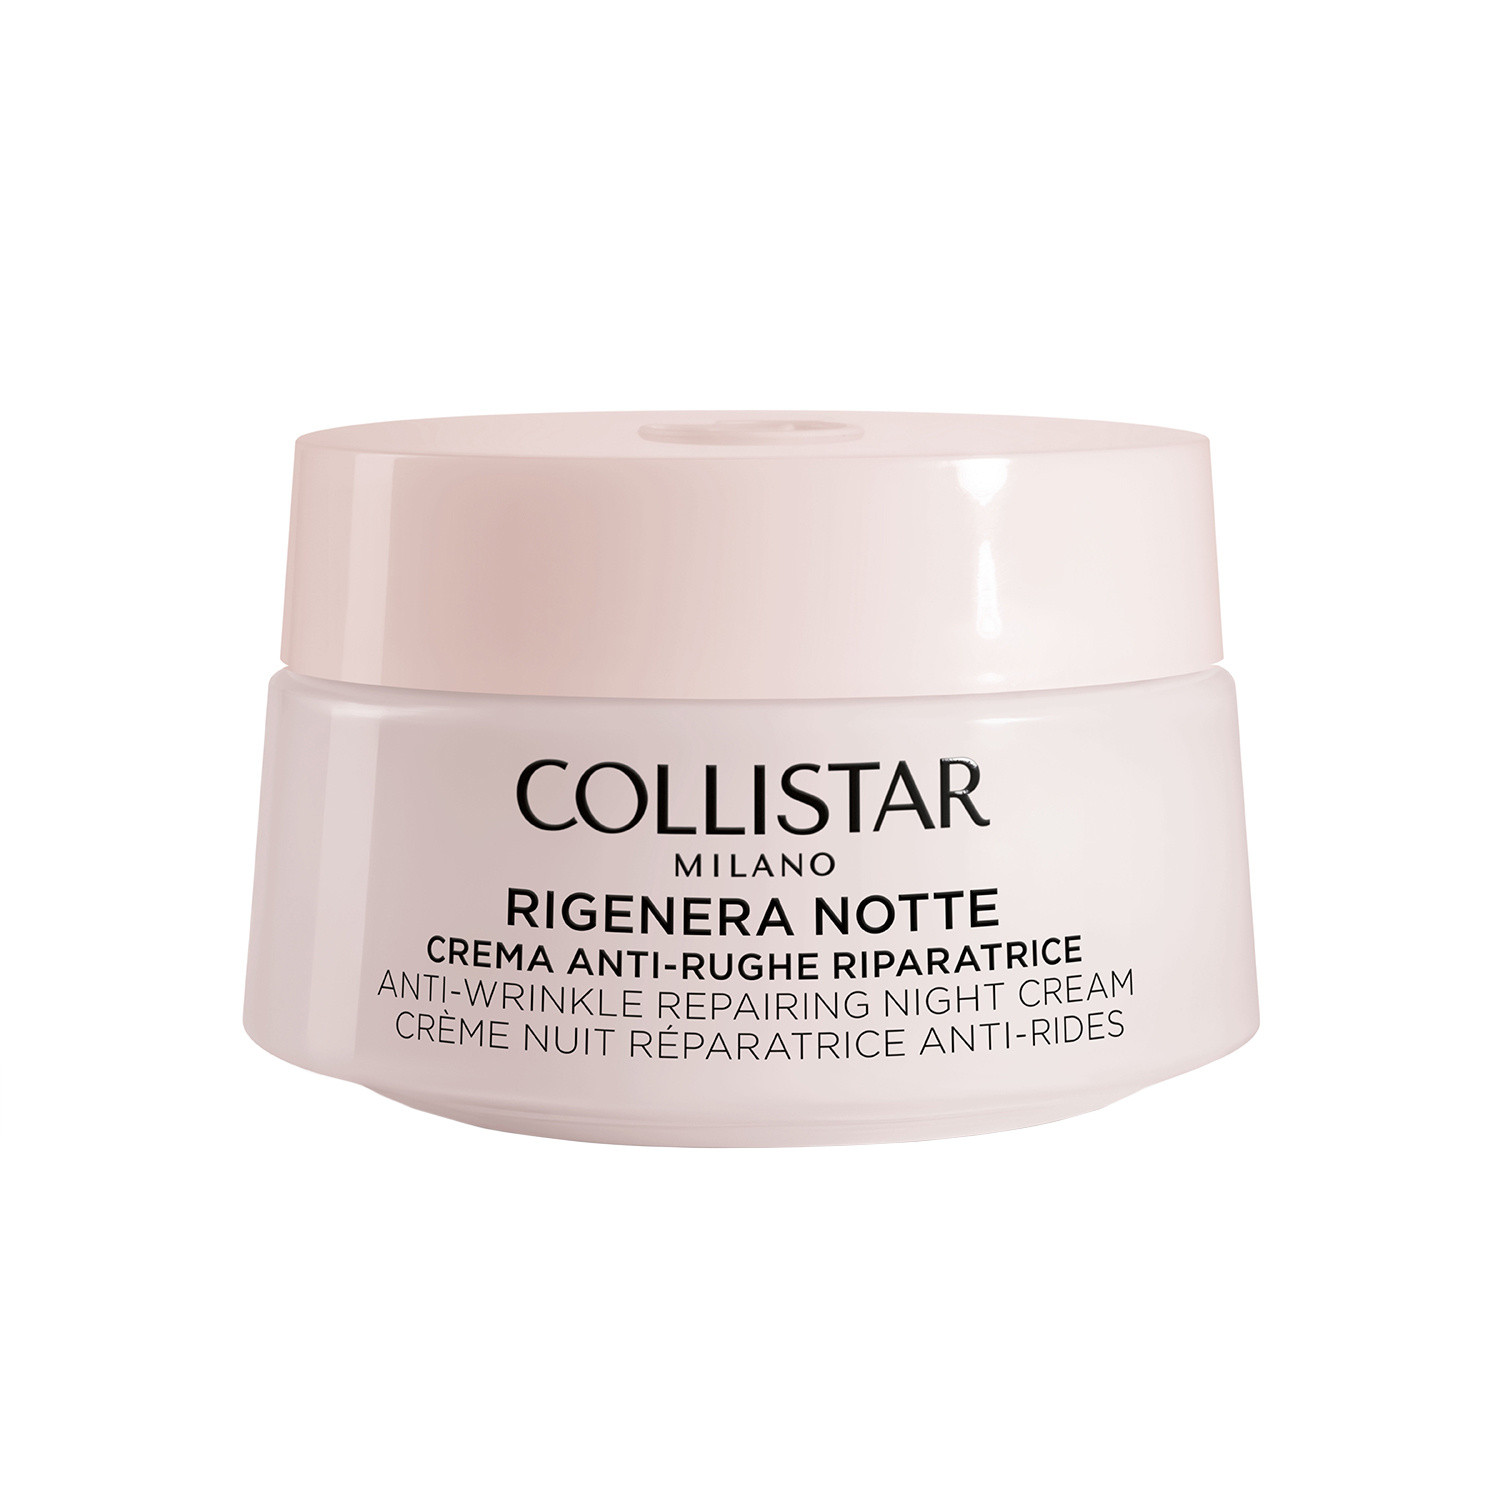 Collistar - Rigenera repairing anti-wrinkle night cream 50 ml, Light Pink, large image number 0